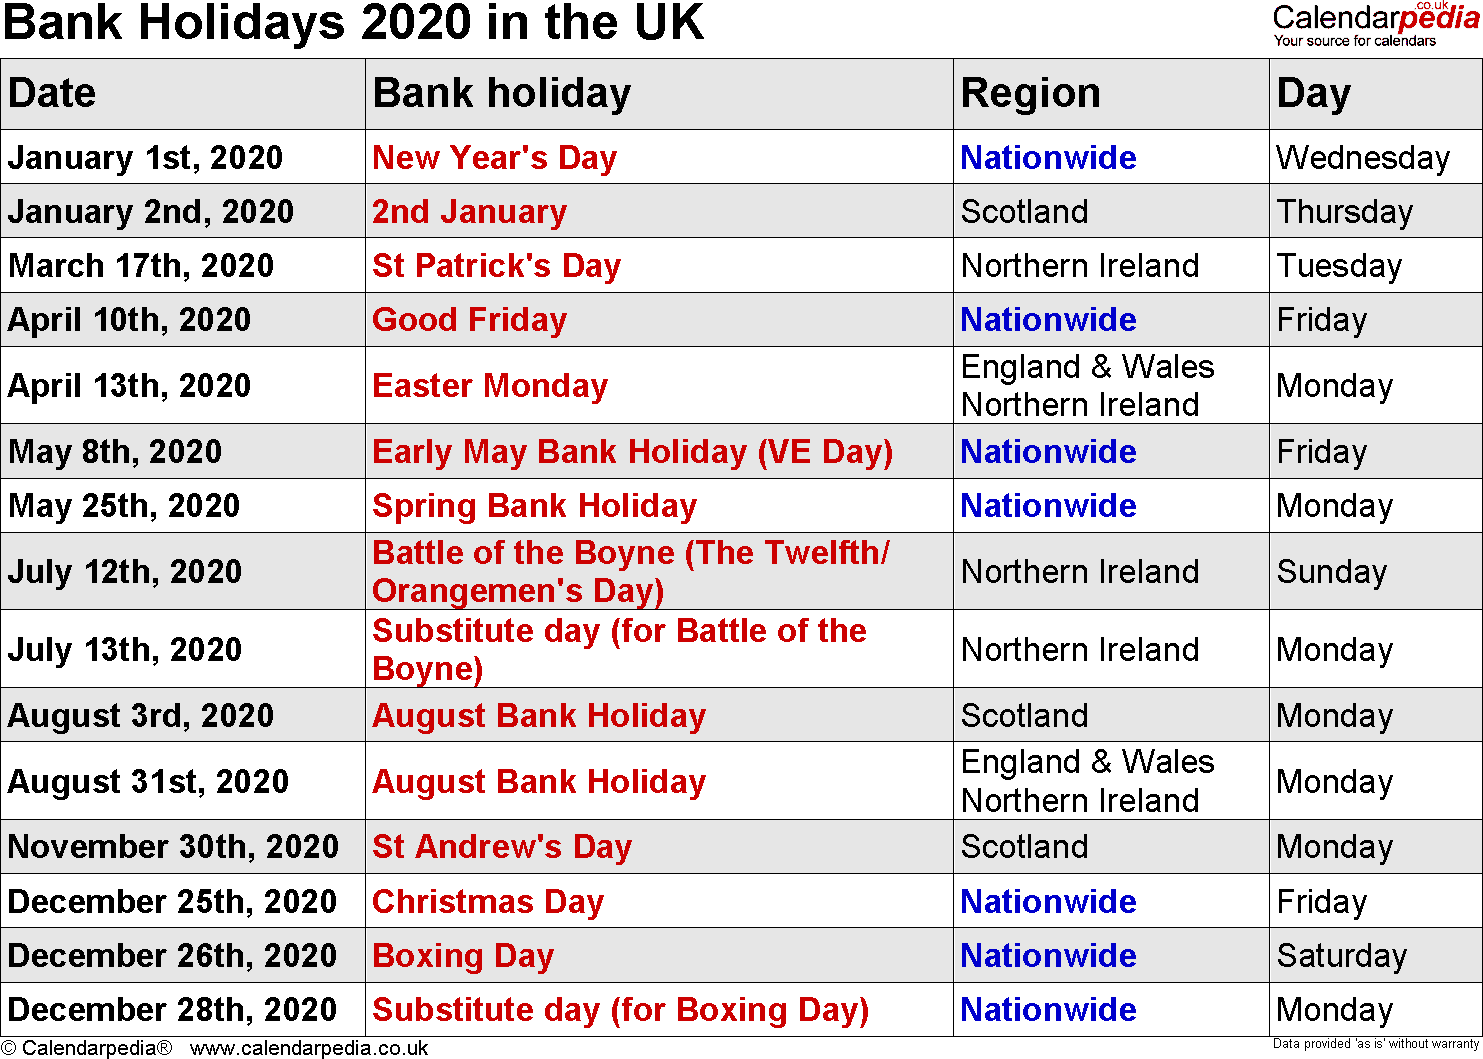 Bank Holidays In December 2021